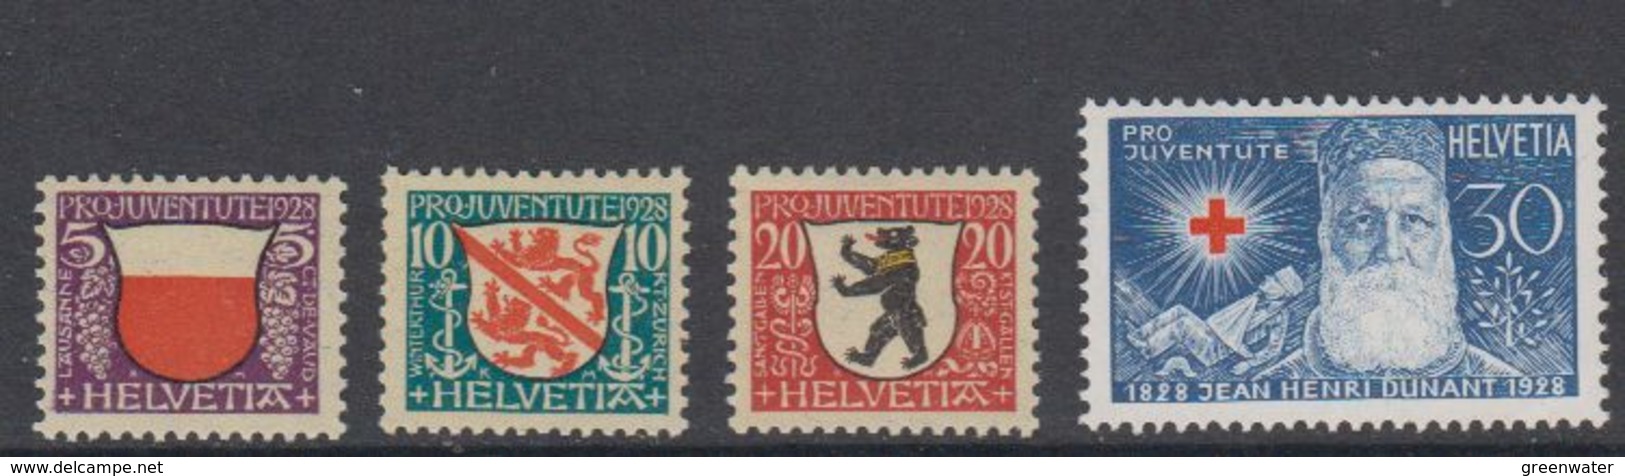 Switzerland 1928 Pro Juventute 4v ** Mnh (44122a) - Ongebruikt